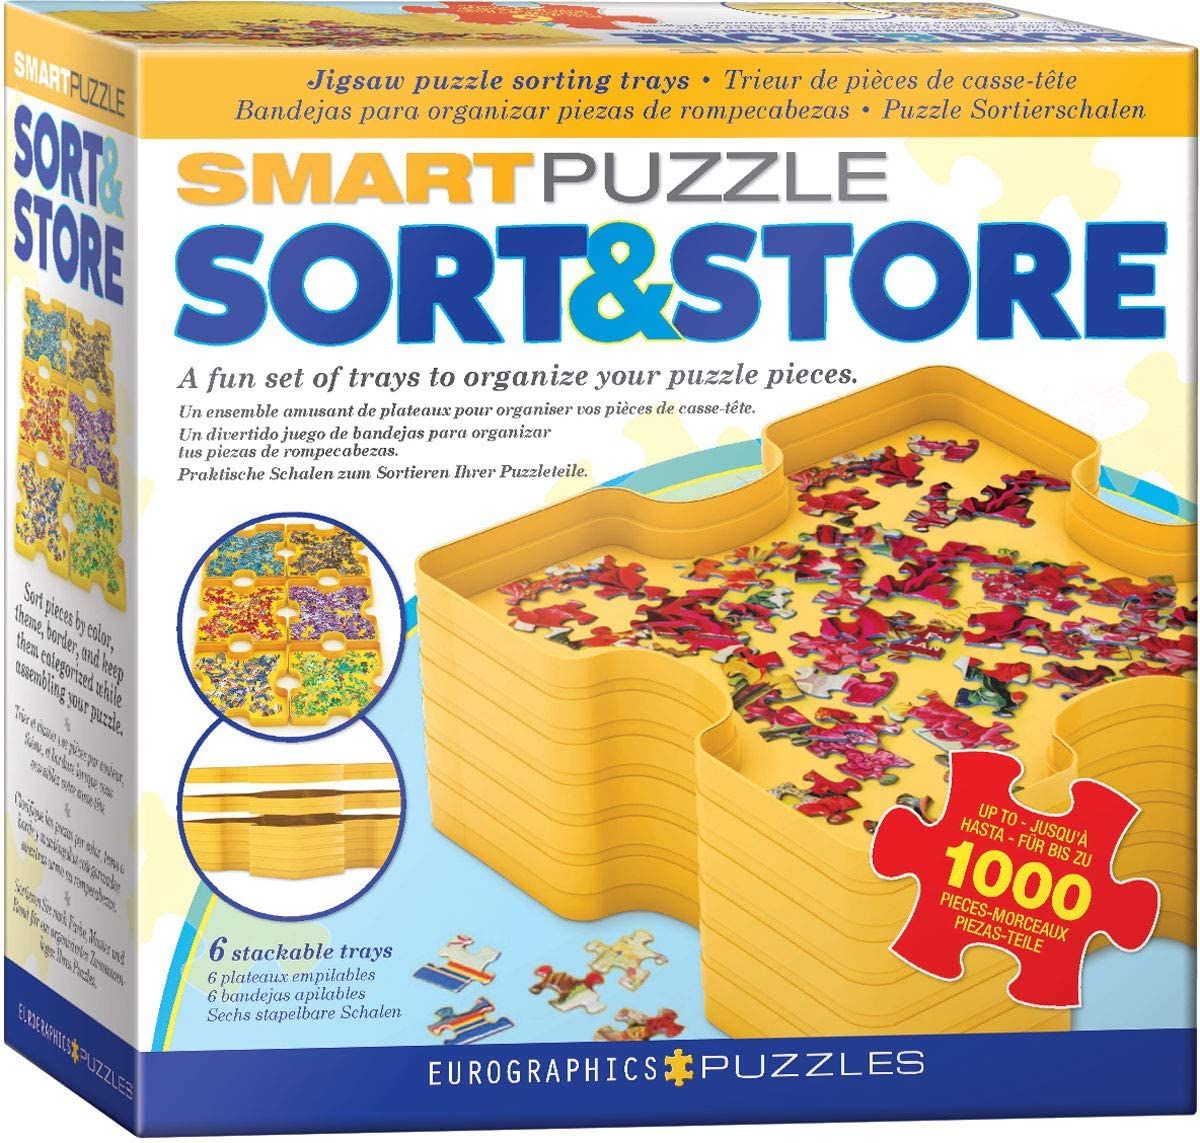 THE BEST Smart-Puzzle Sort & Store